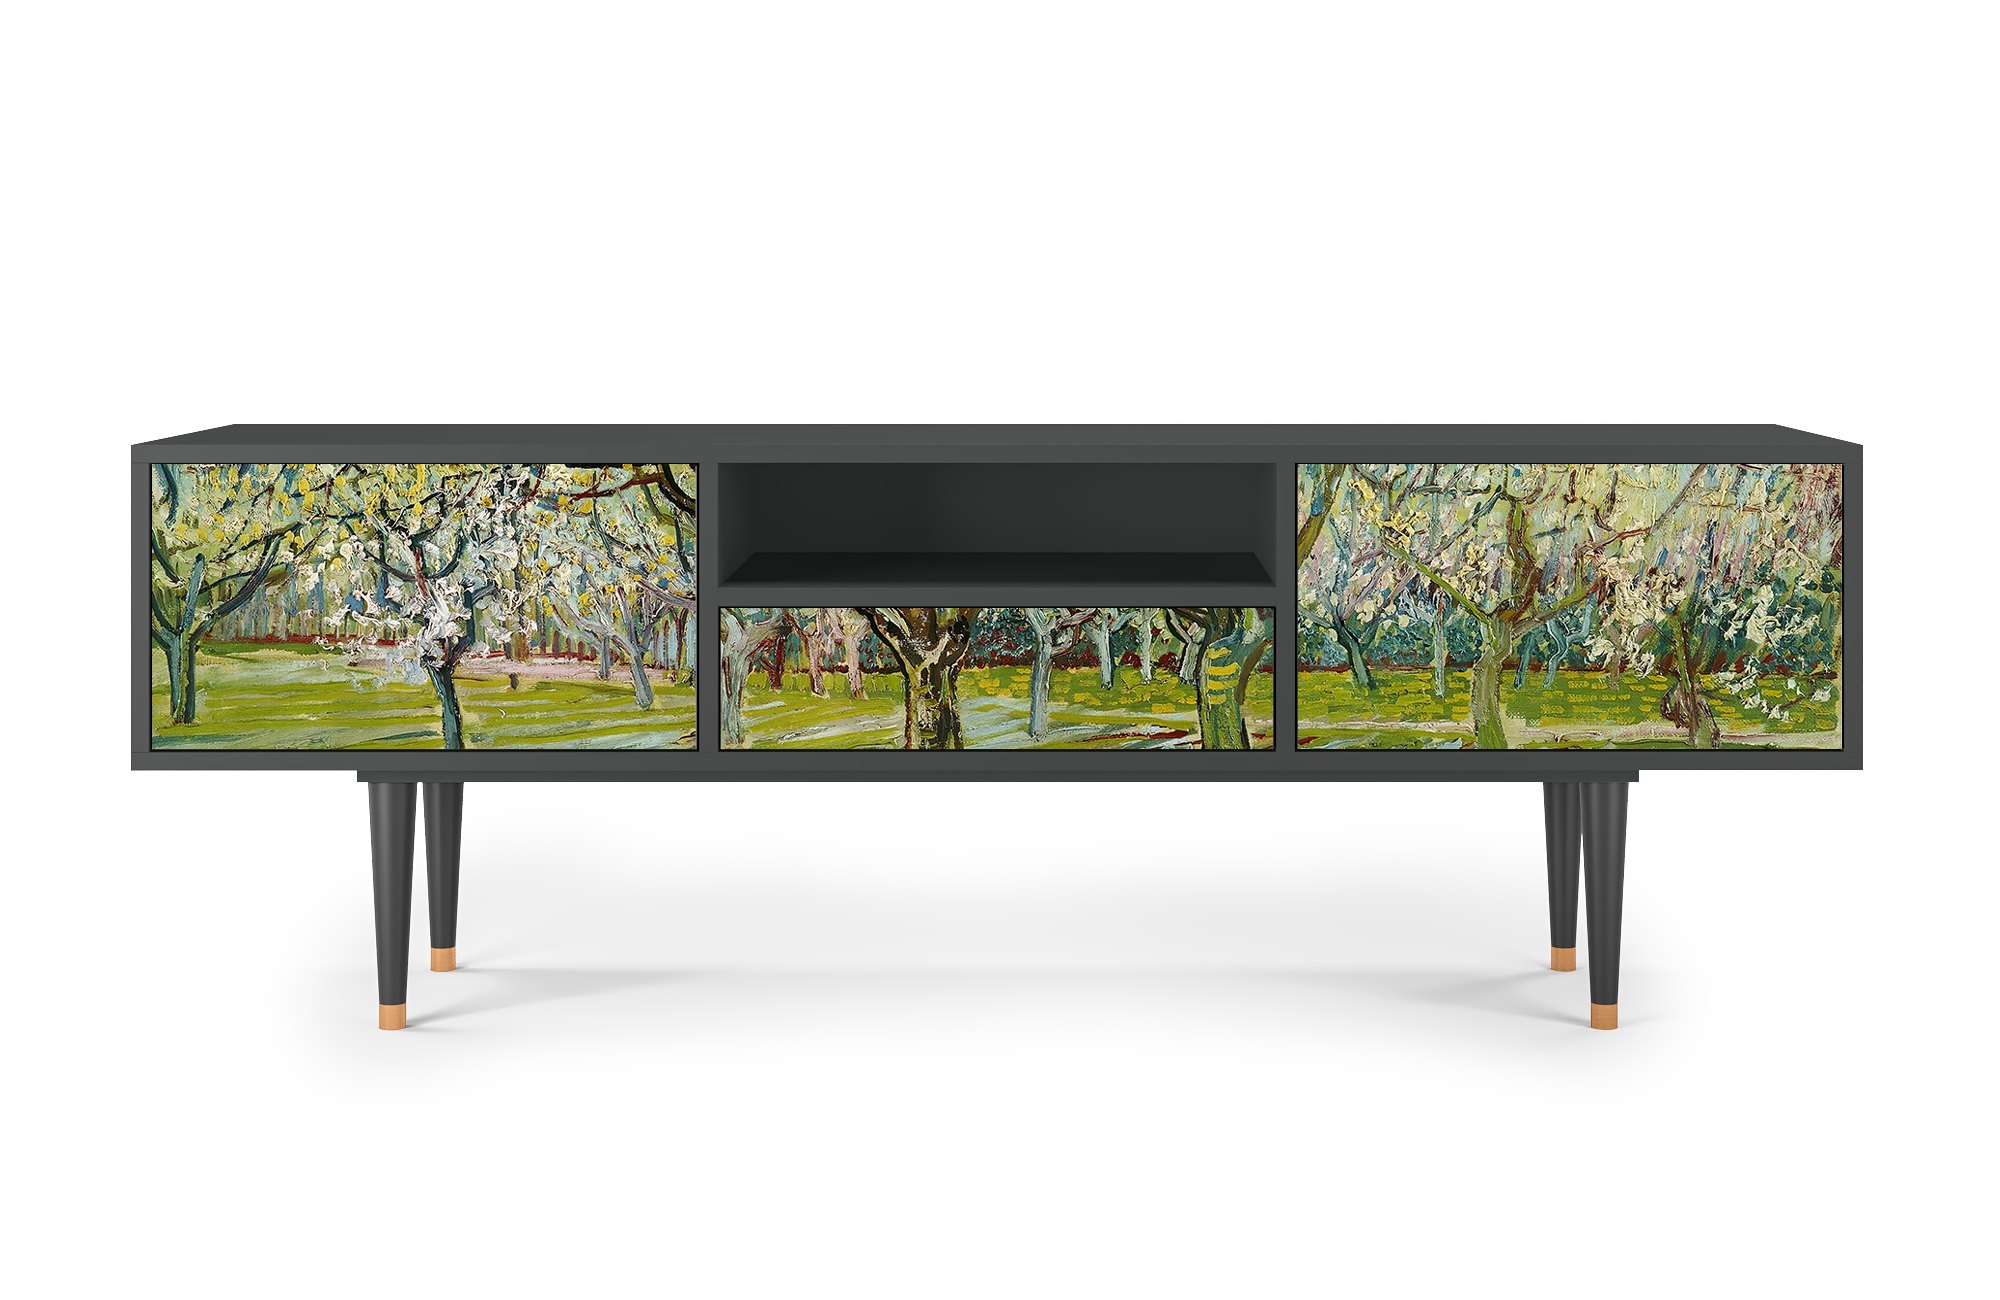 ТВ-Тумба - STORYZ - T6 The White Orchard by Van Gogh, 170 x 69 x 41 см, Антрацит - фотография № 2